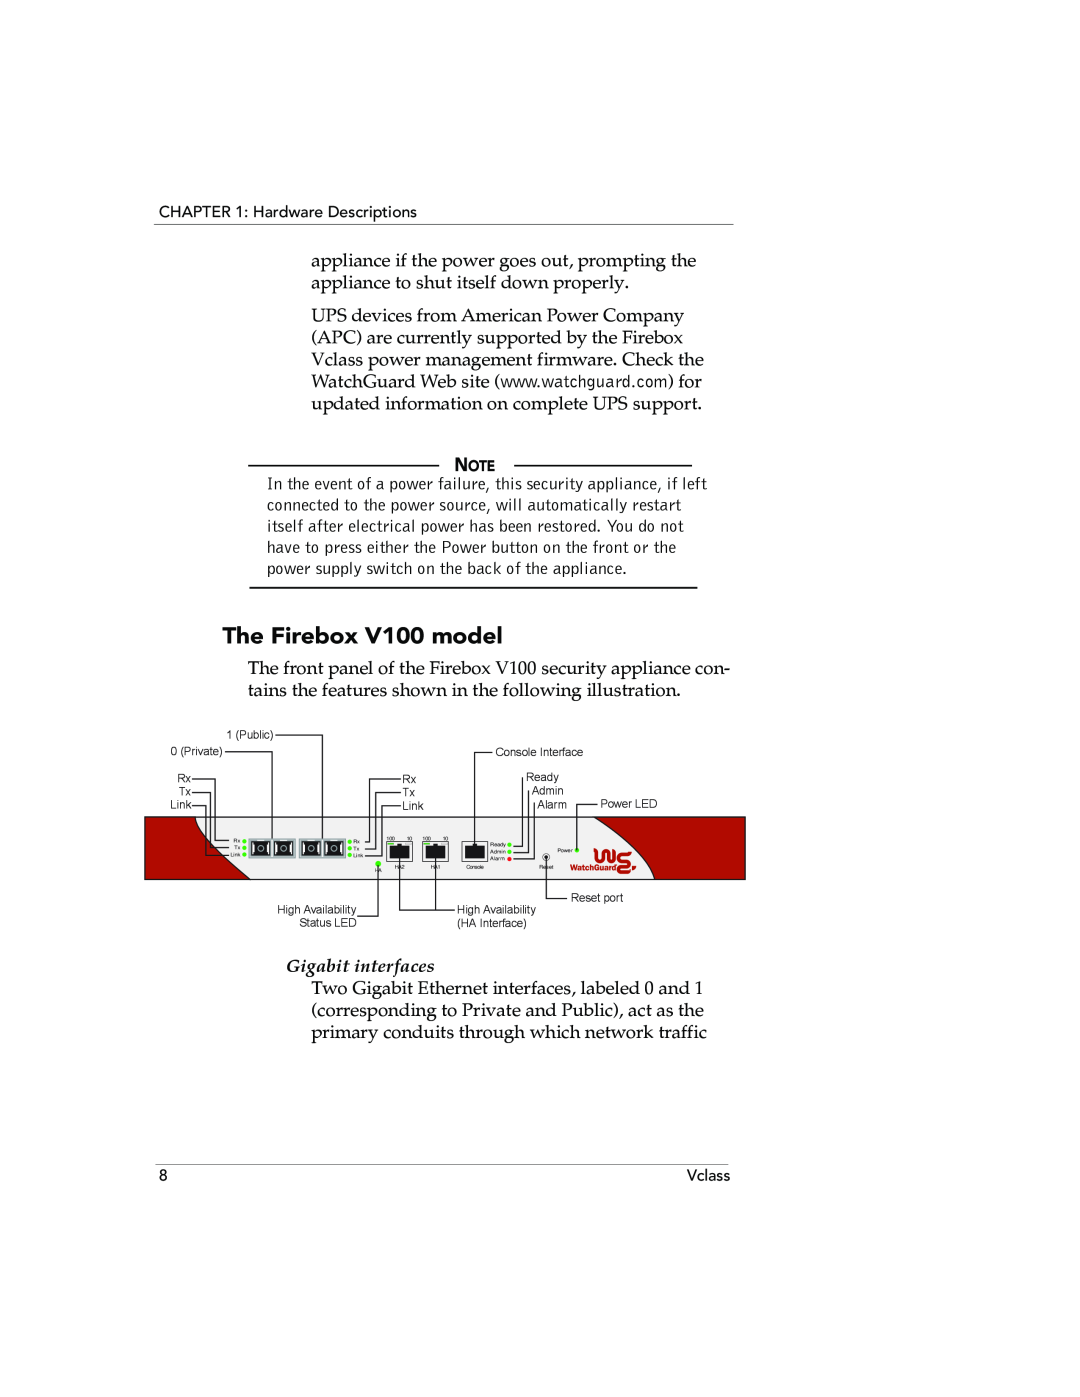 WatchGuard Technologies V80, V60L manual The Firebox V100 model, Gigabit interfaces 